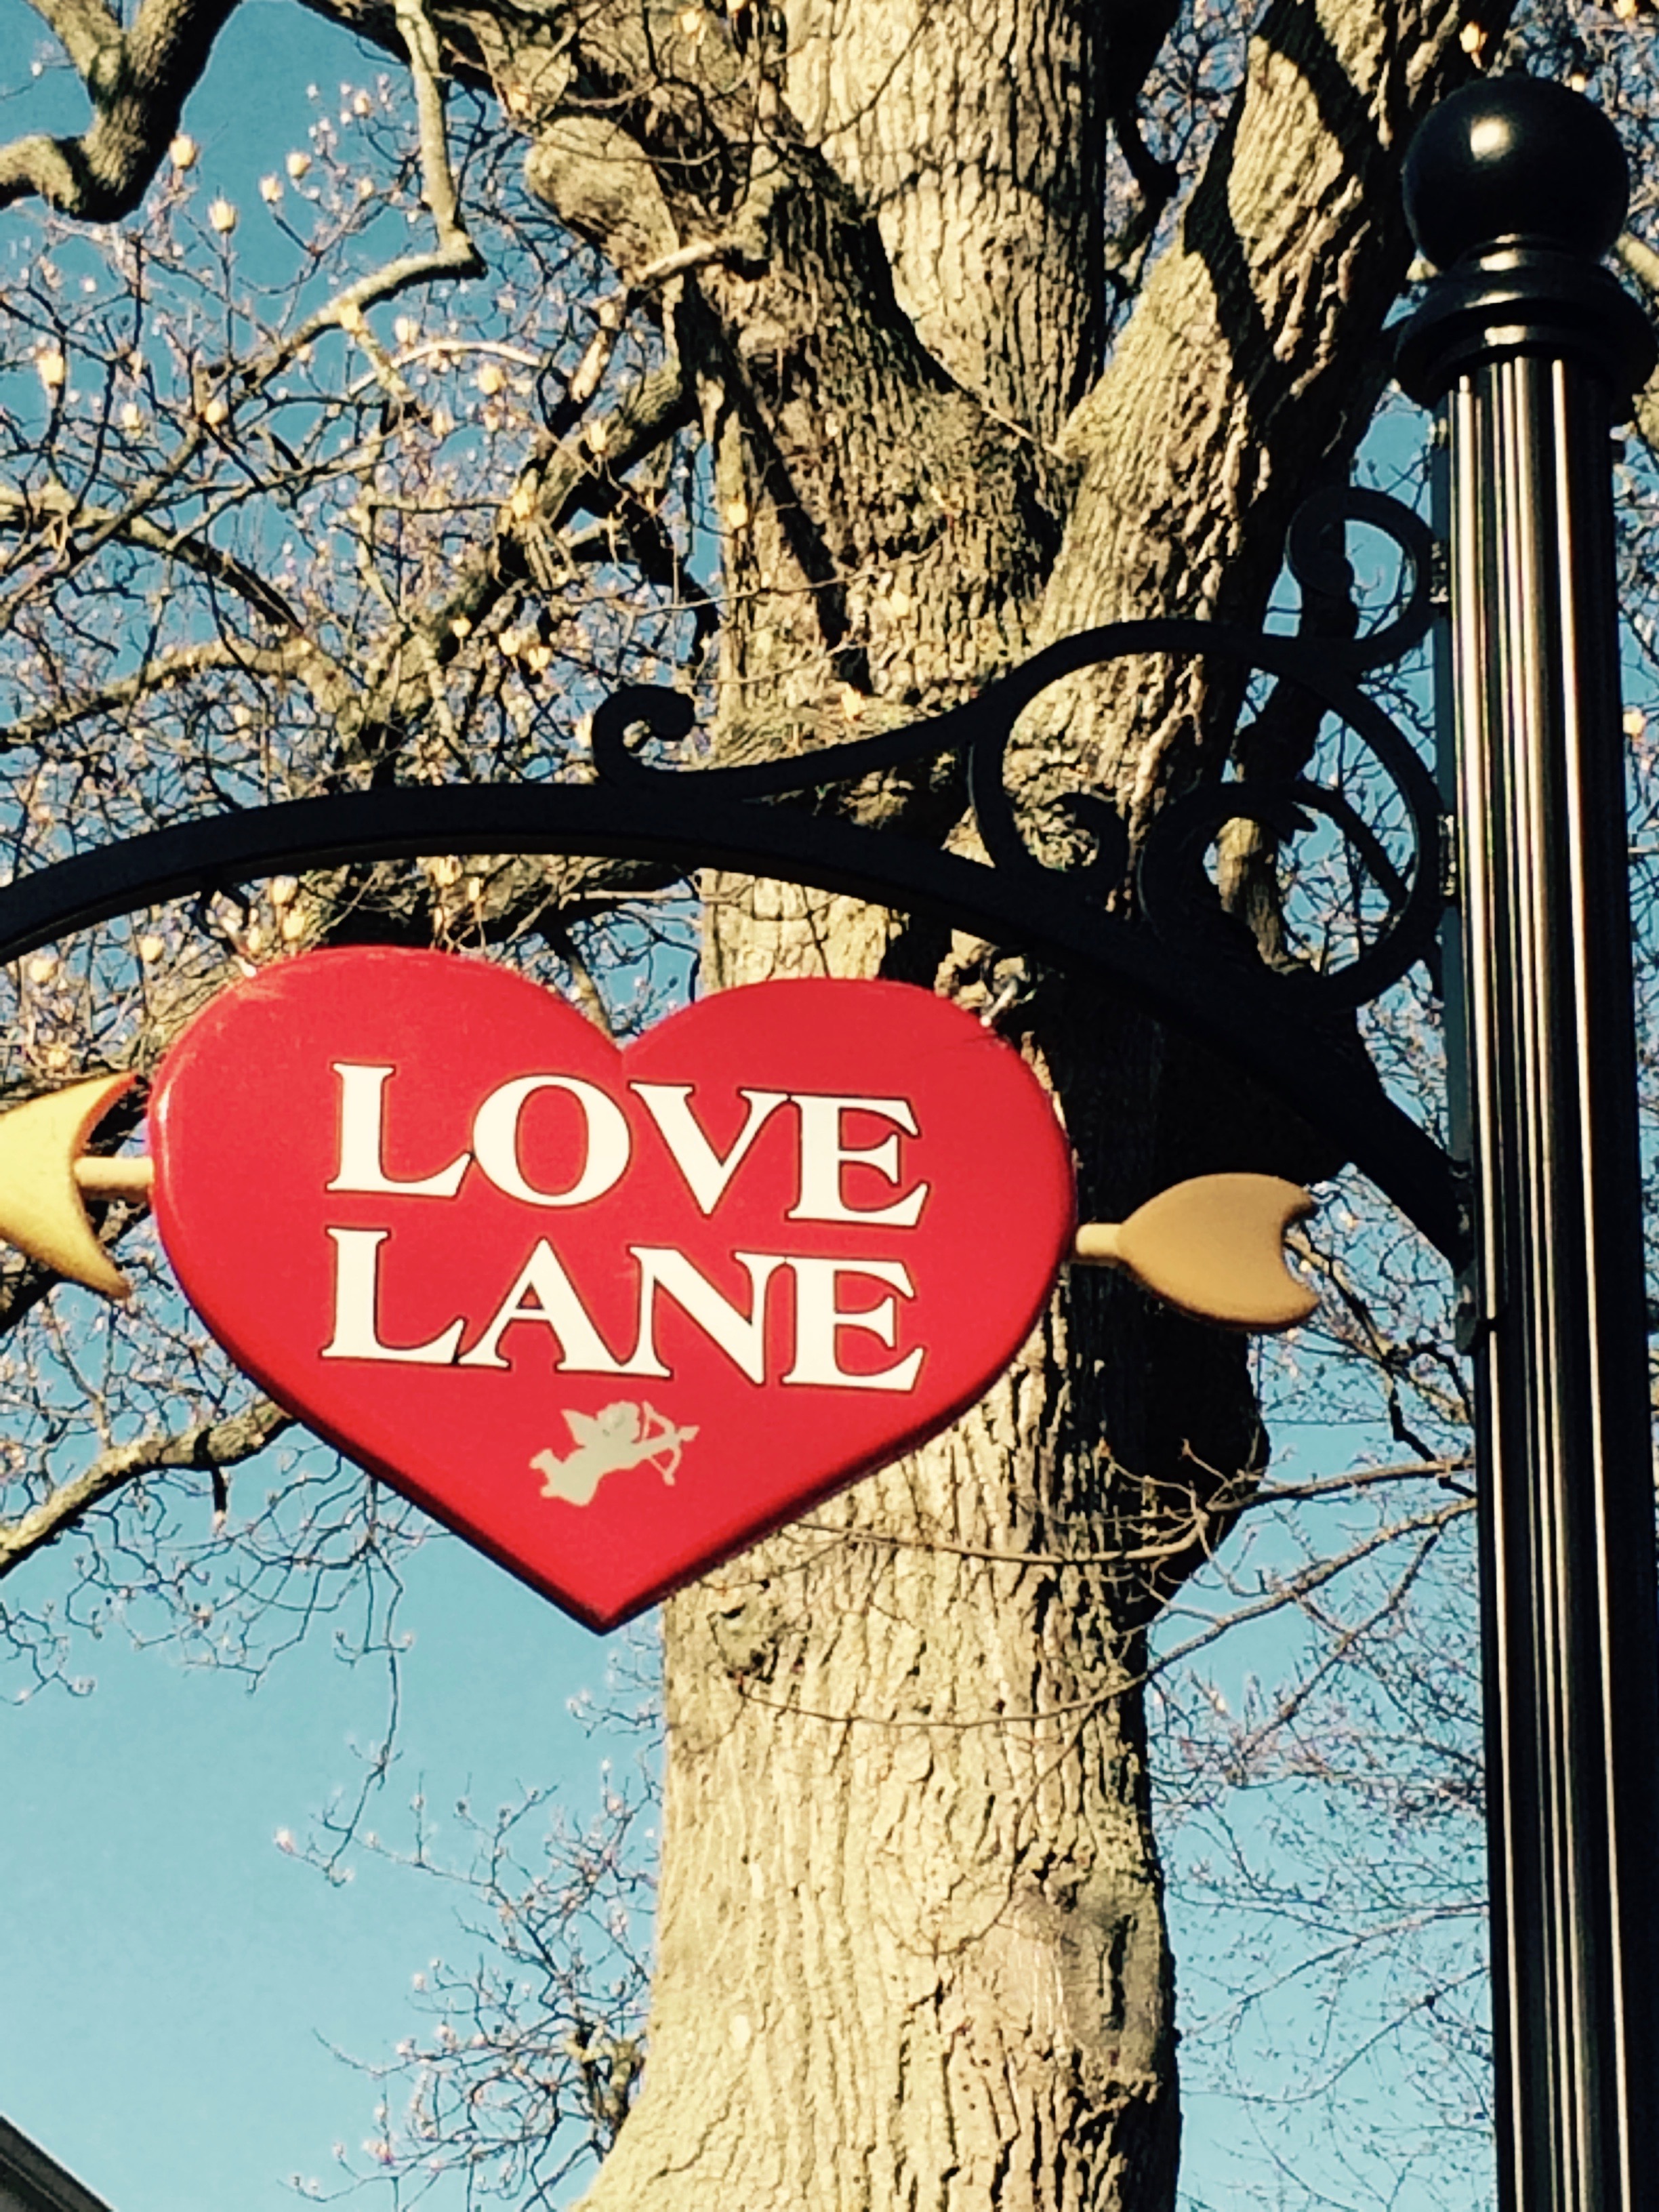 Love Lane, Mattituck 